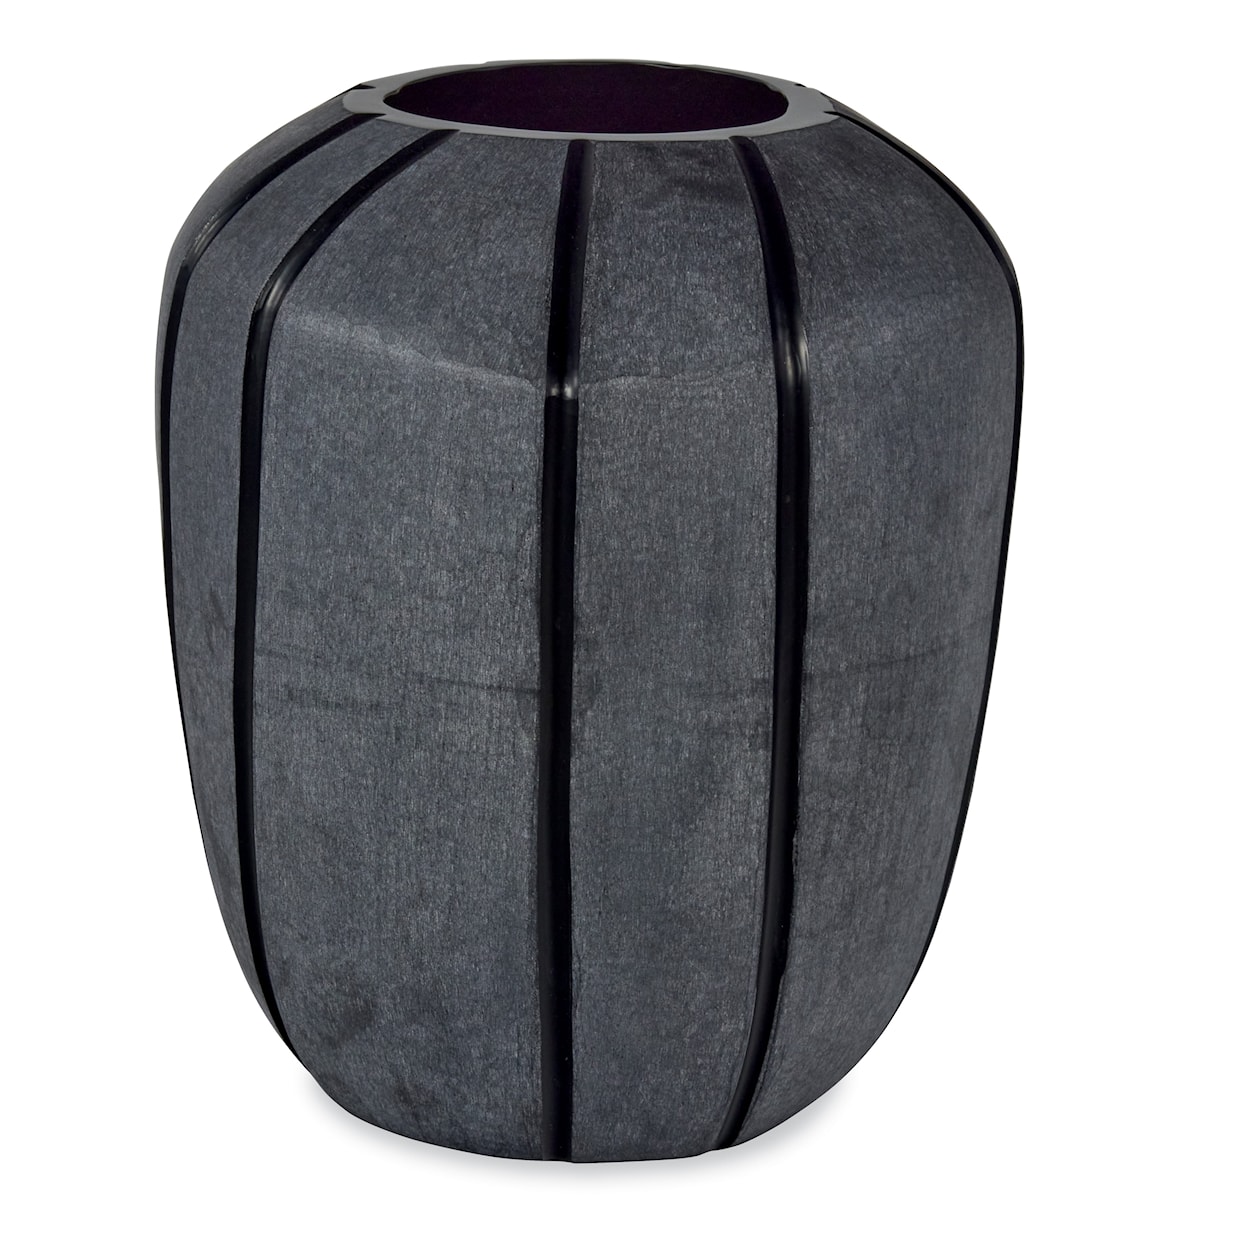 BOBO Intriguing Objects BOBO Intriguing Objects Simius Soft Black Glass Blown Vase